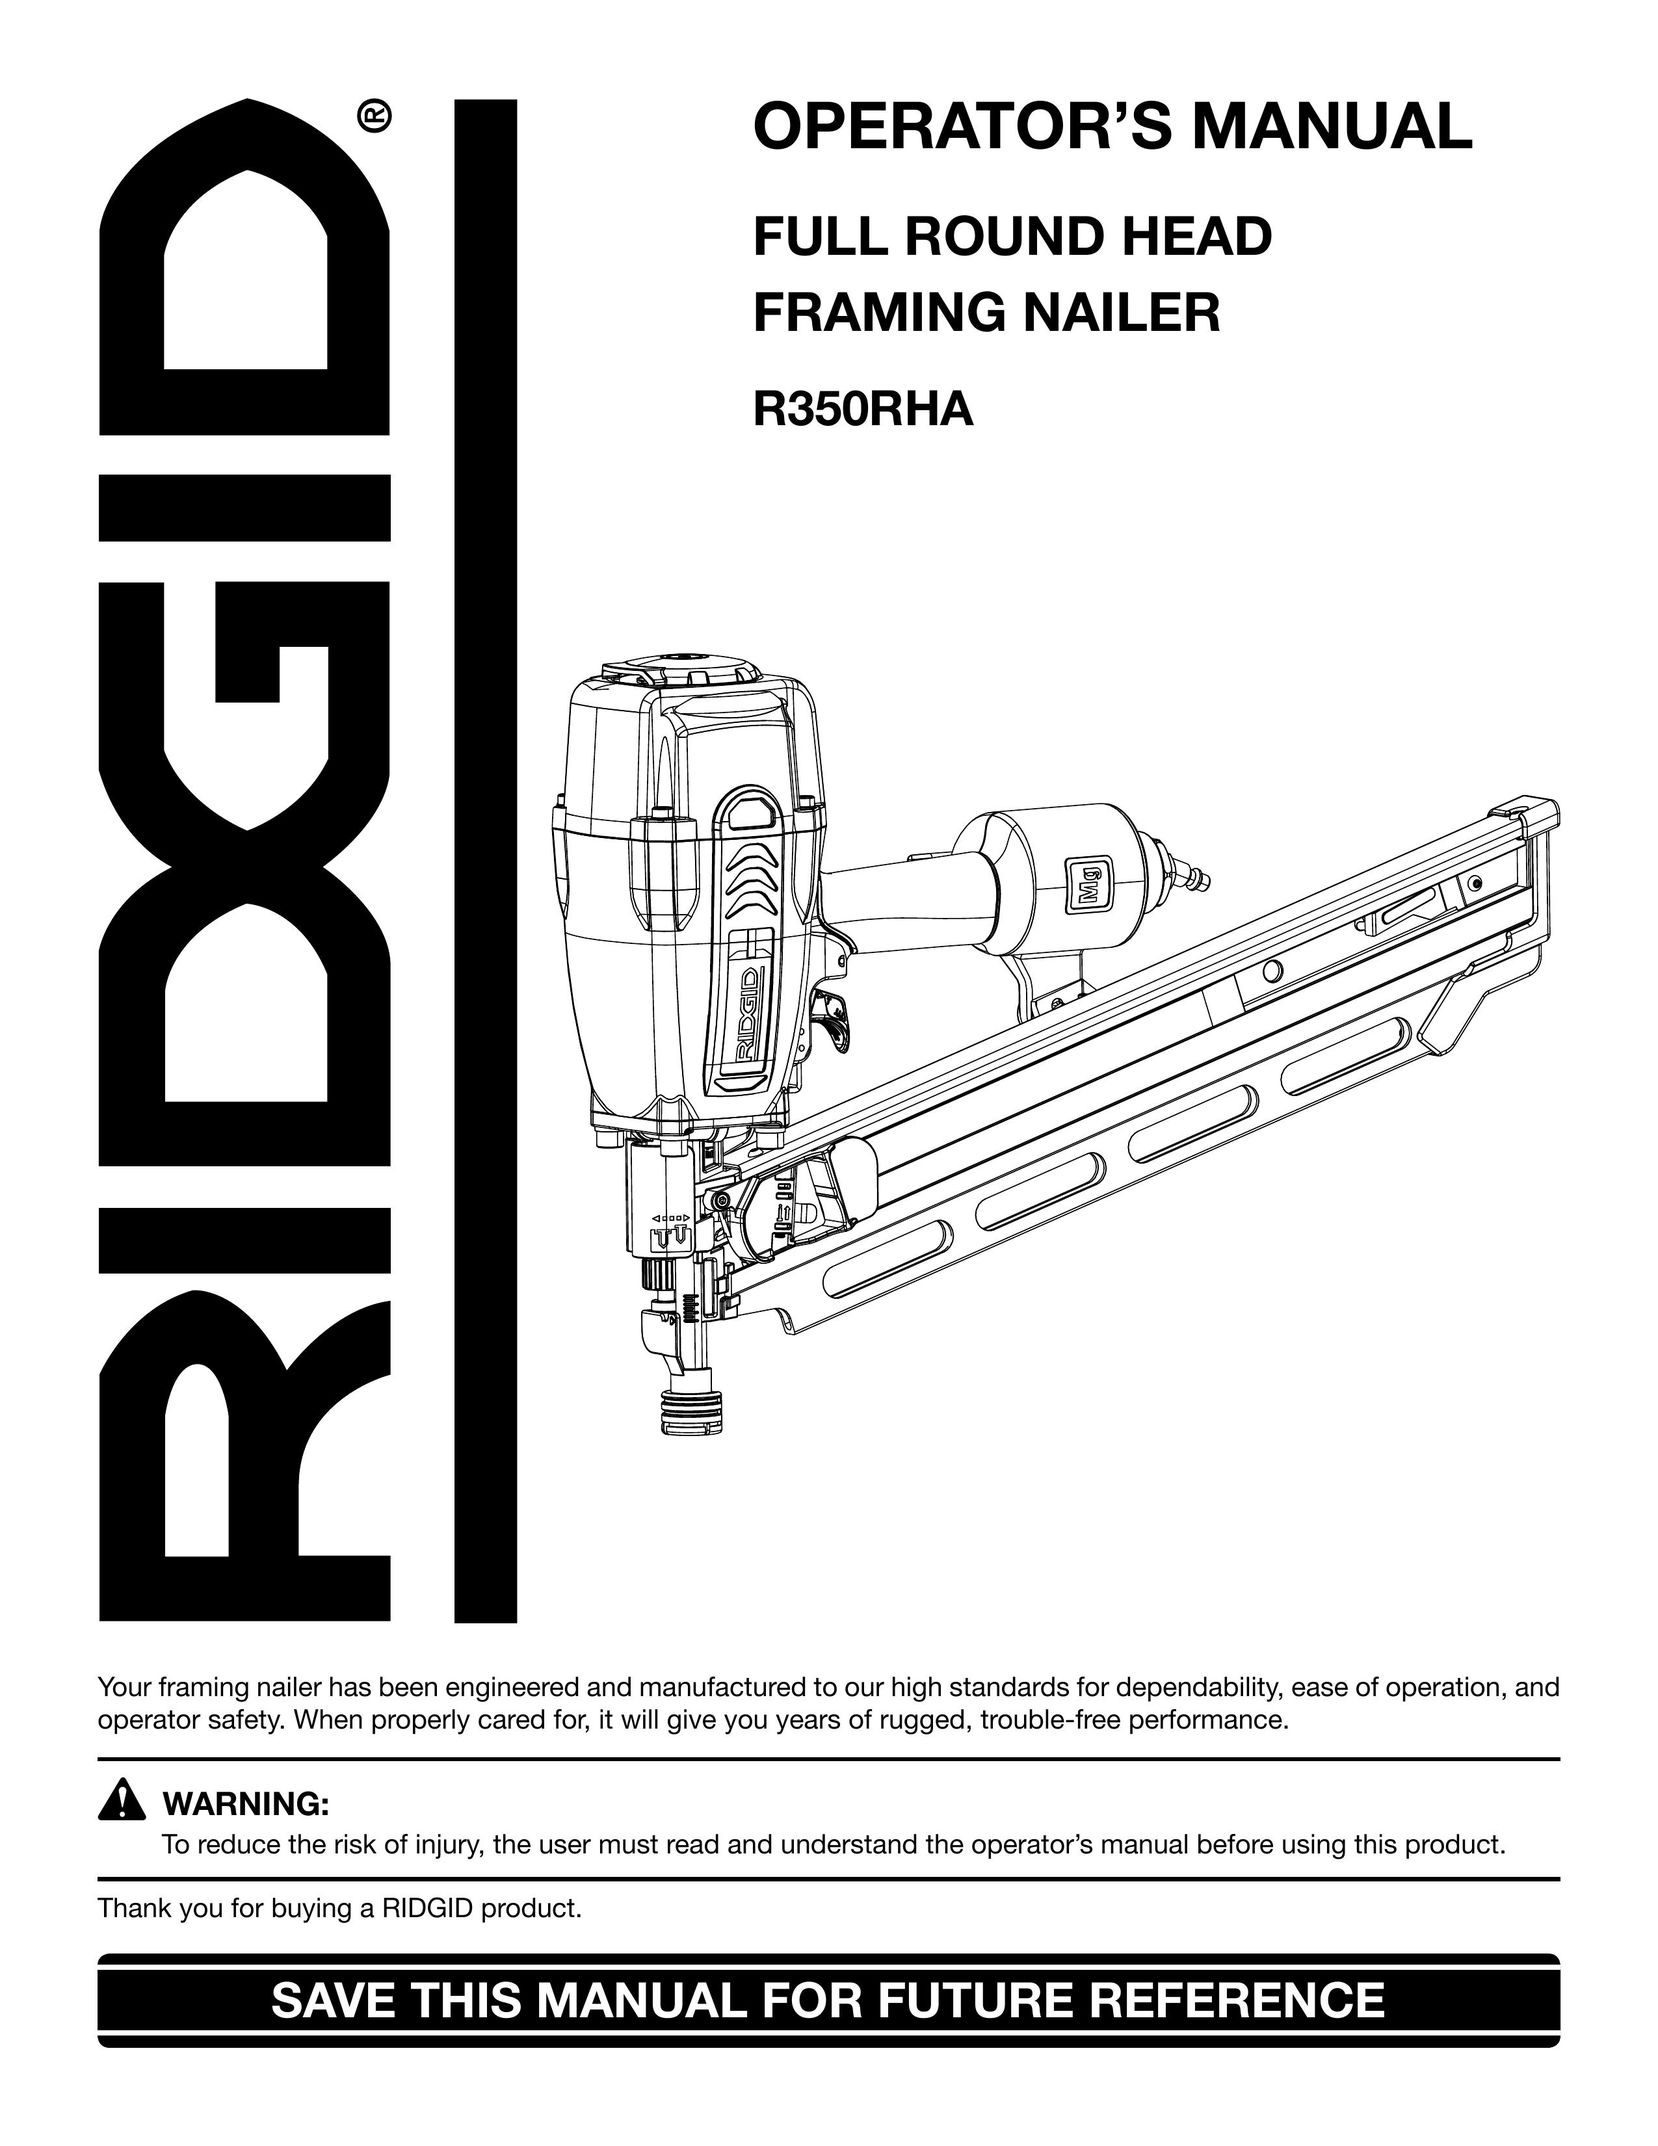 RIDGID R350RHA Nail Gun User Manual